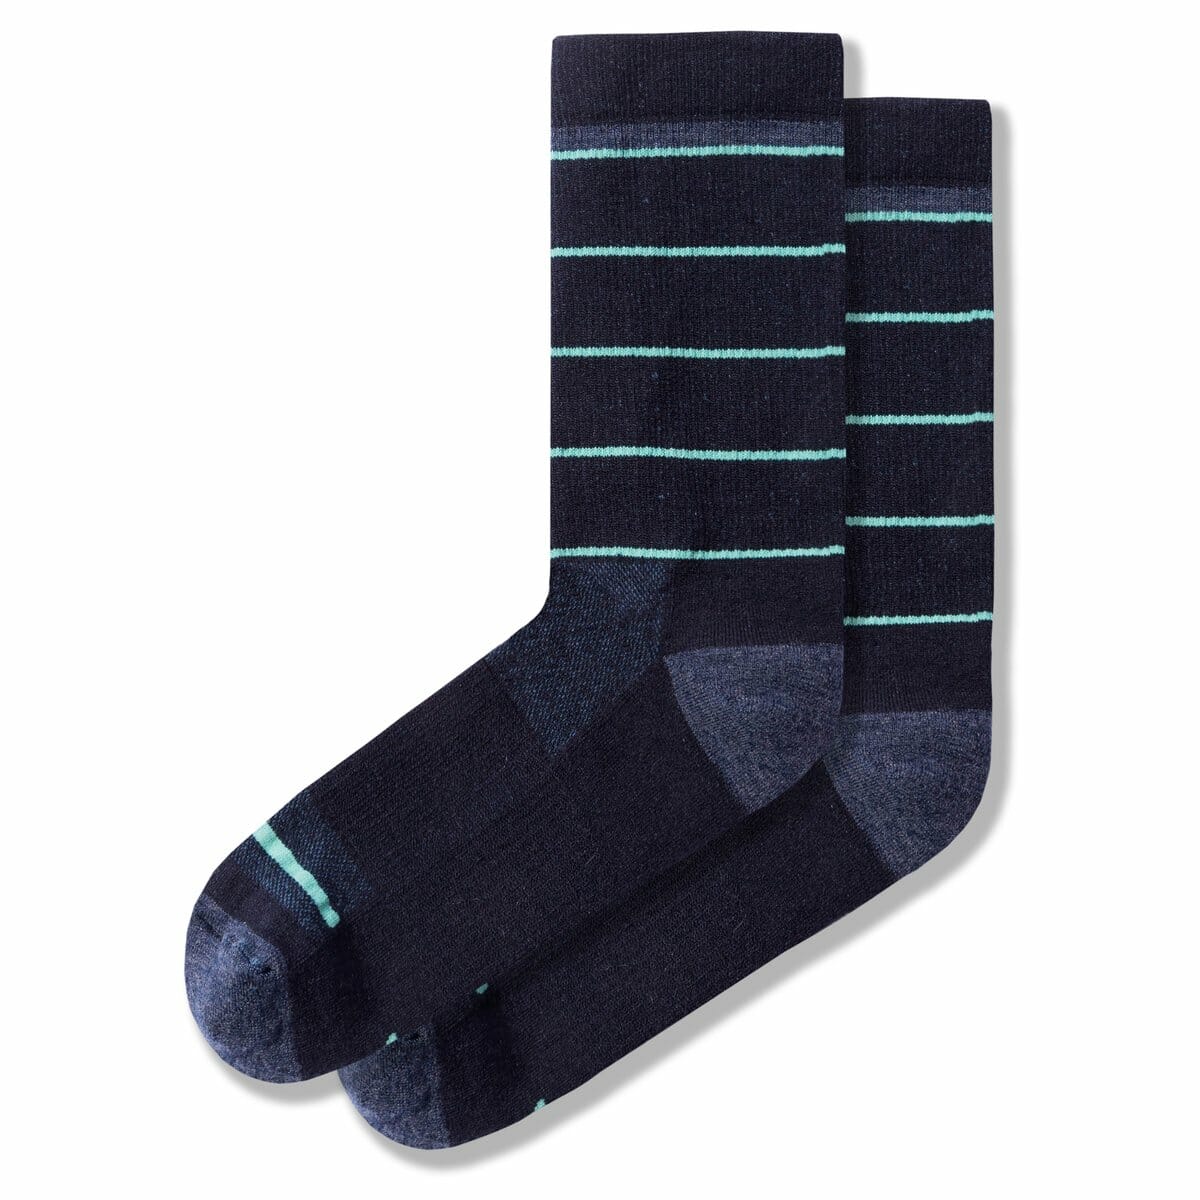 Best Wool Socks: Bombas Vs. Darn Tough Socks And Many More!